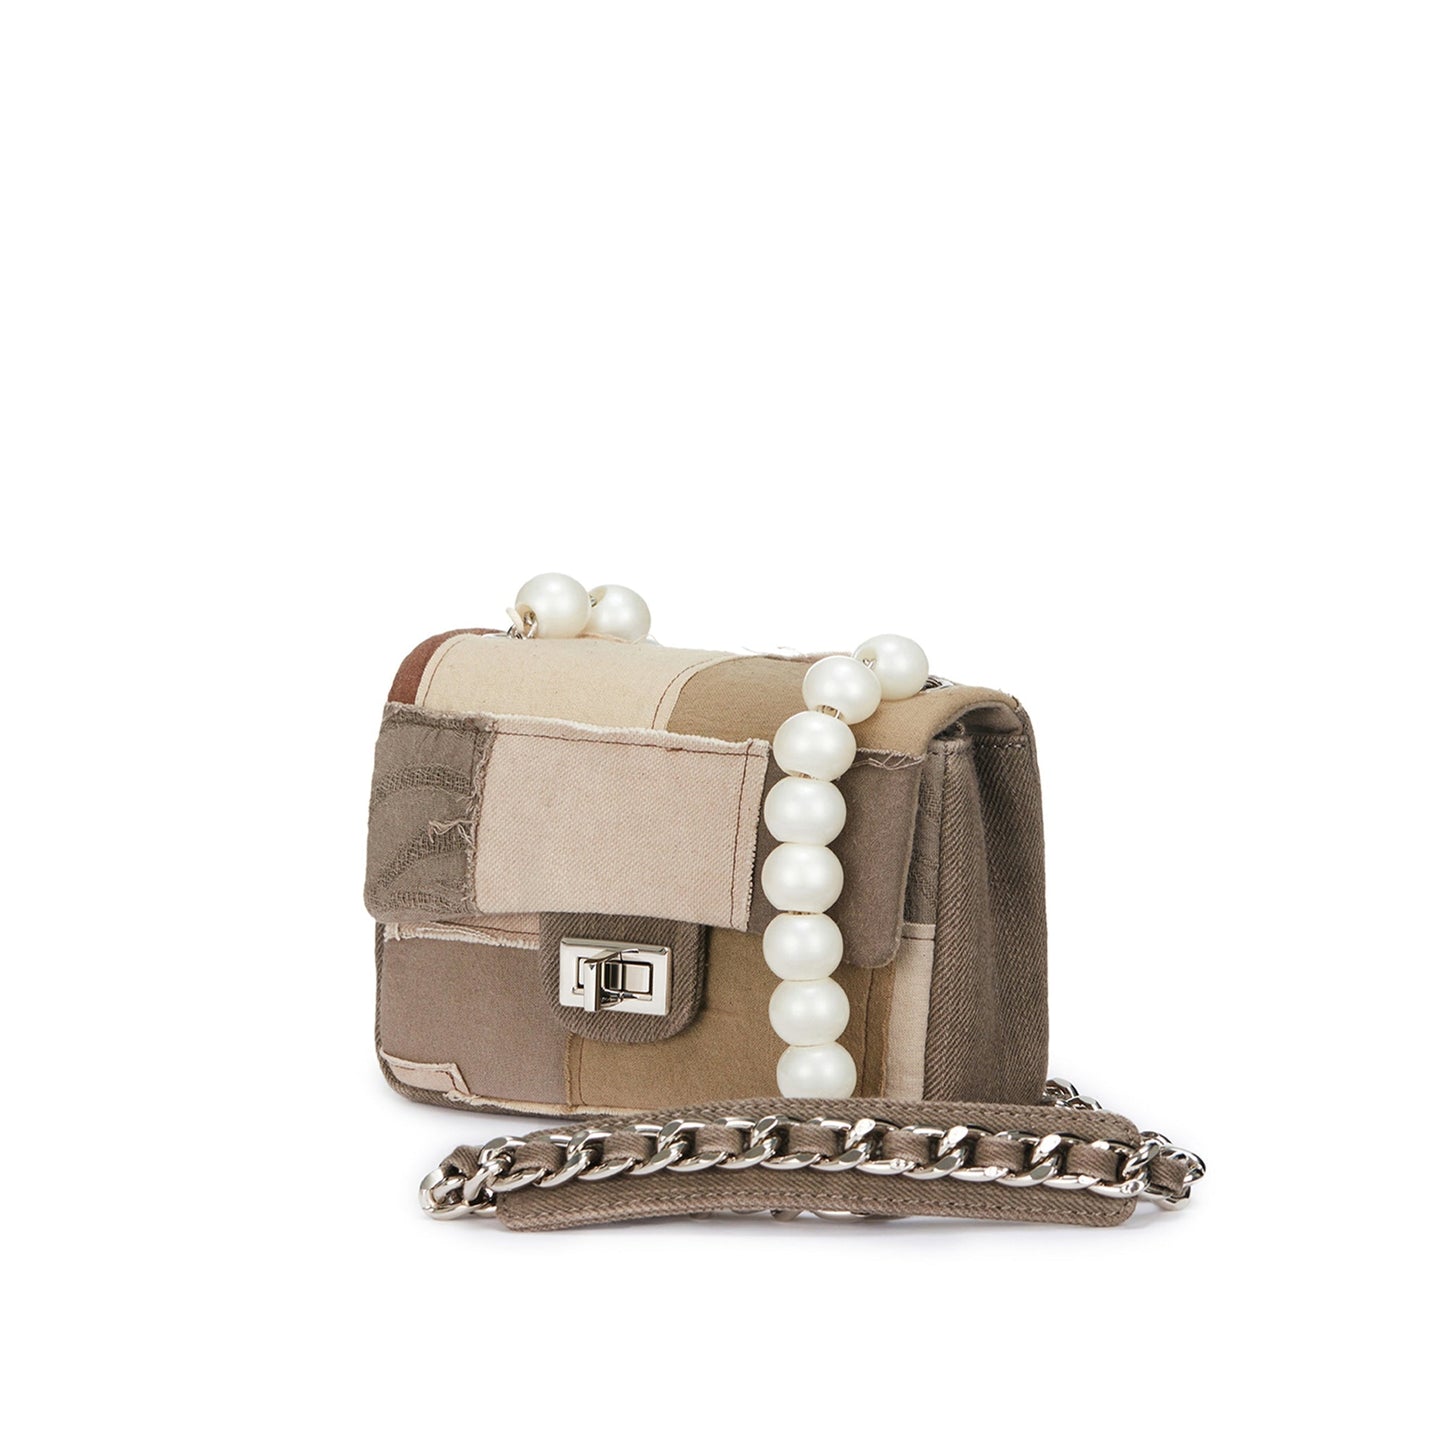 DK BROWN Vintage Chain Bag SMALL